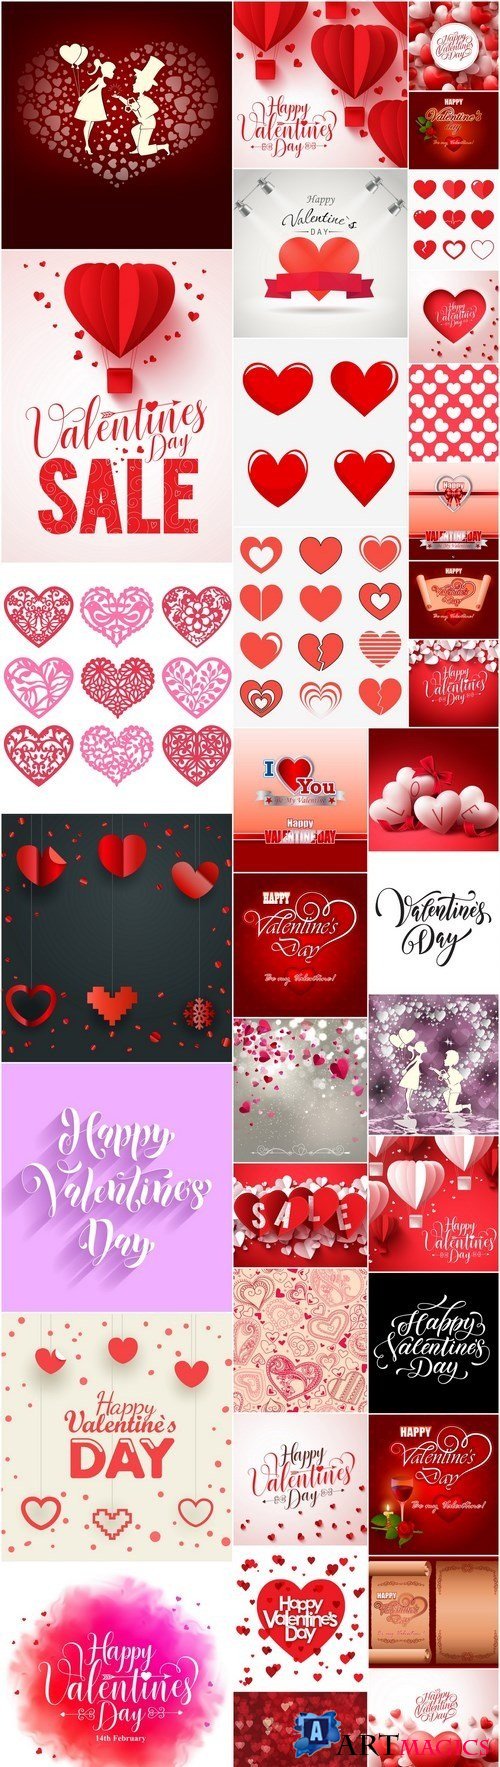 Happy Valentines Day Background #15 - 60 Vector